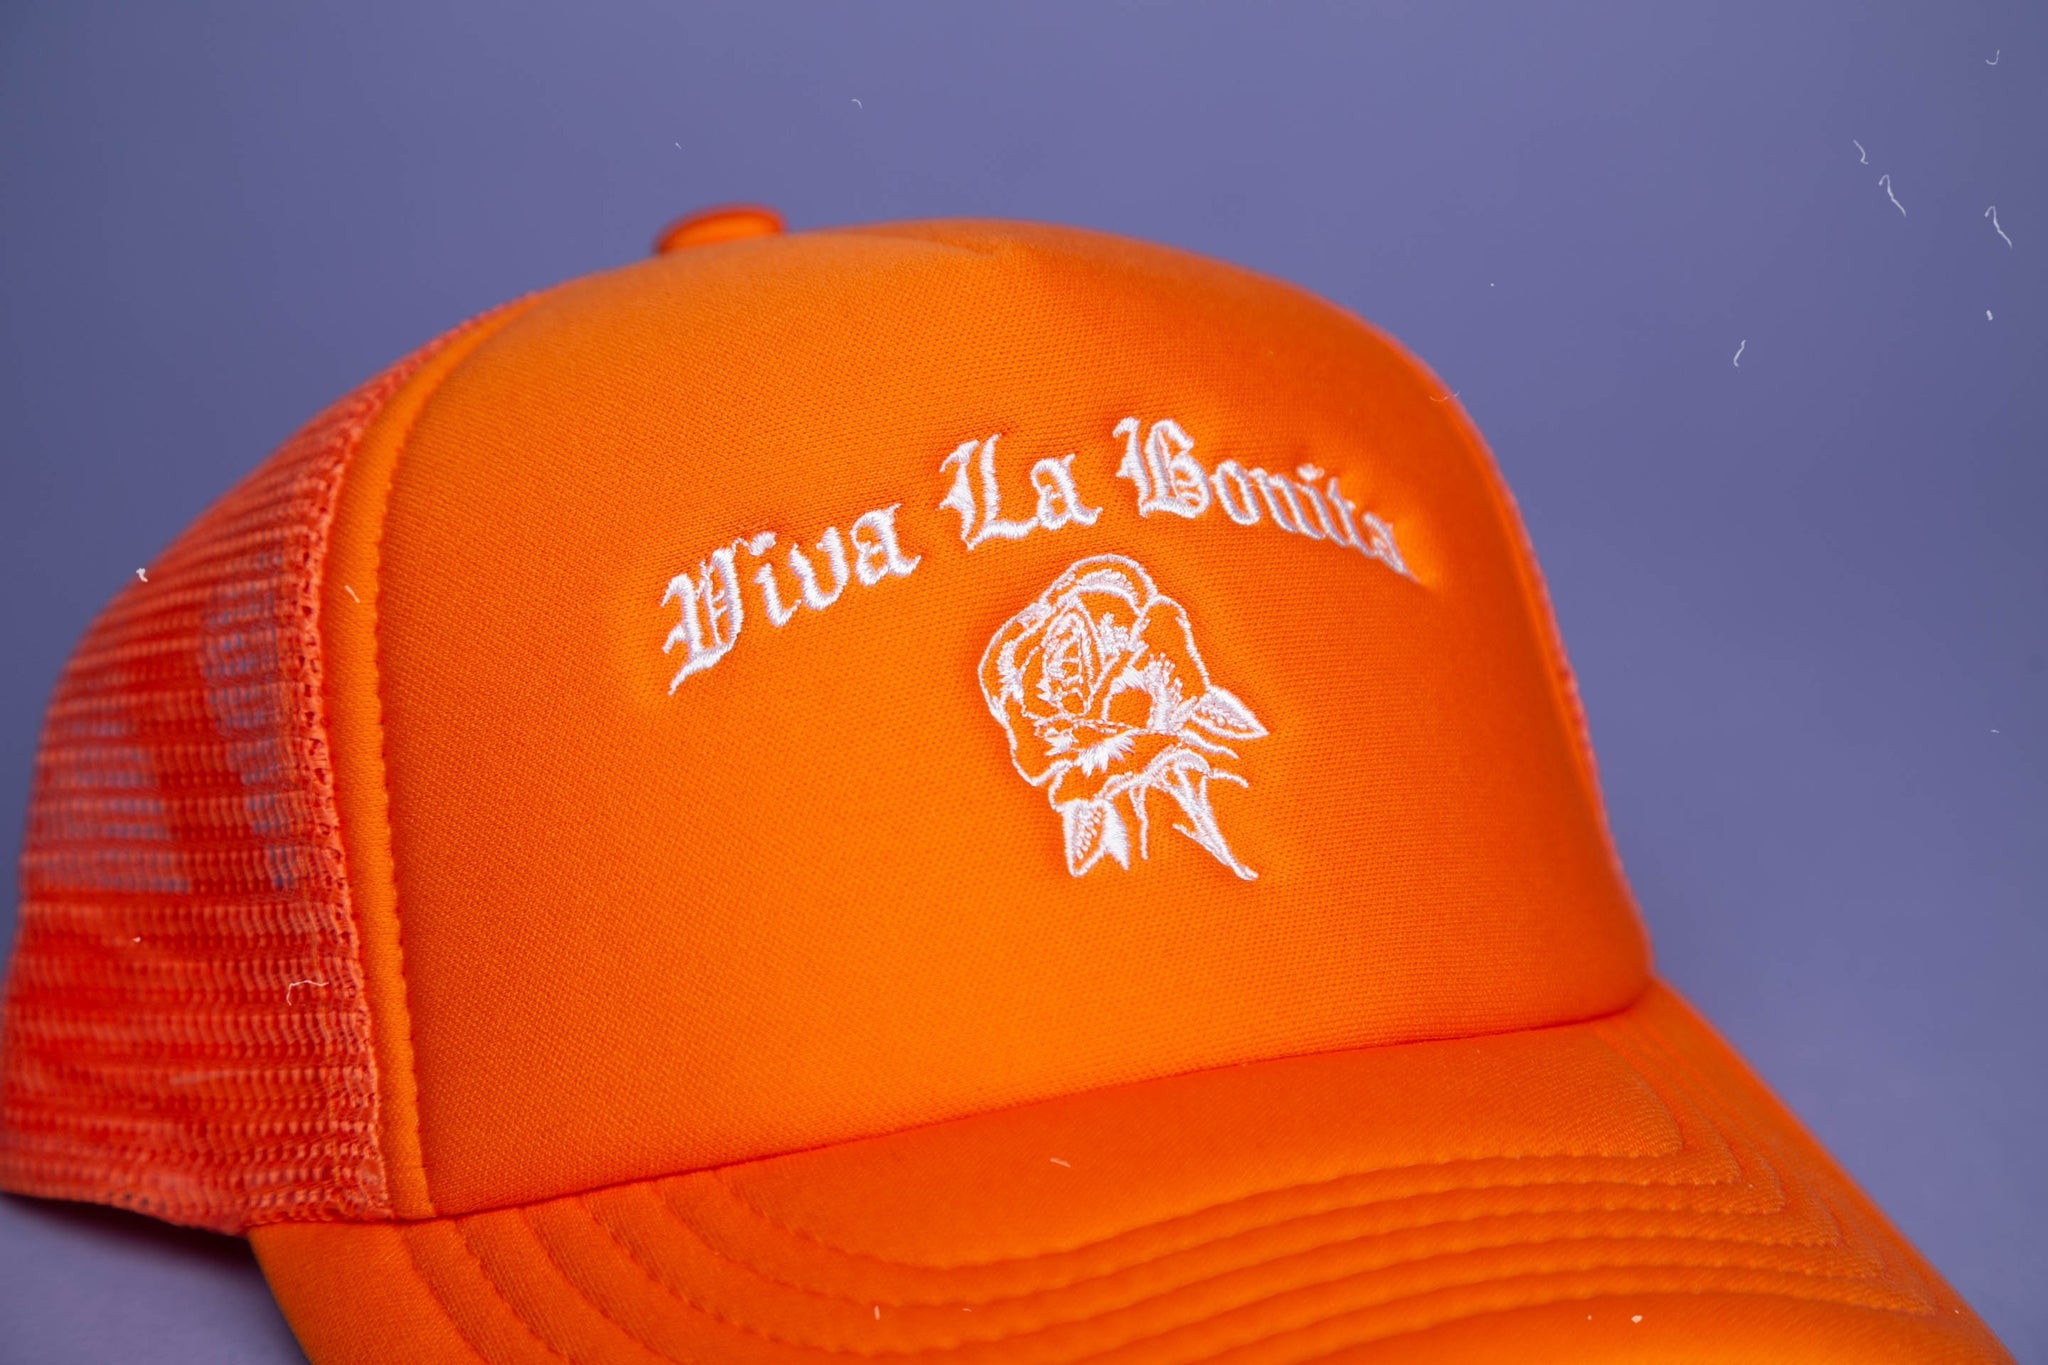 ORANGE LA ROSA TRUCKER HAT